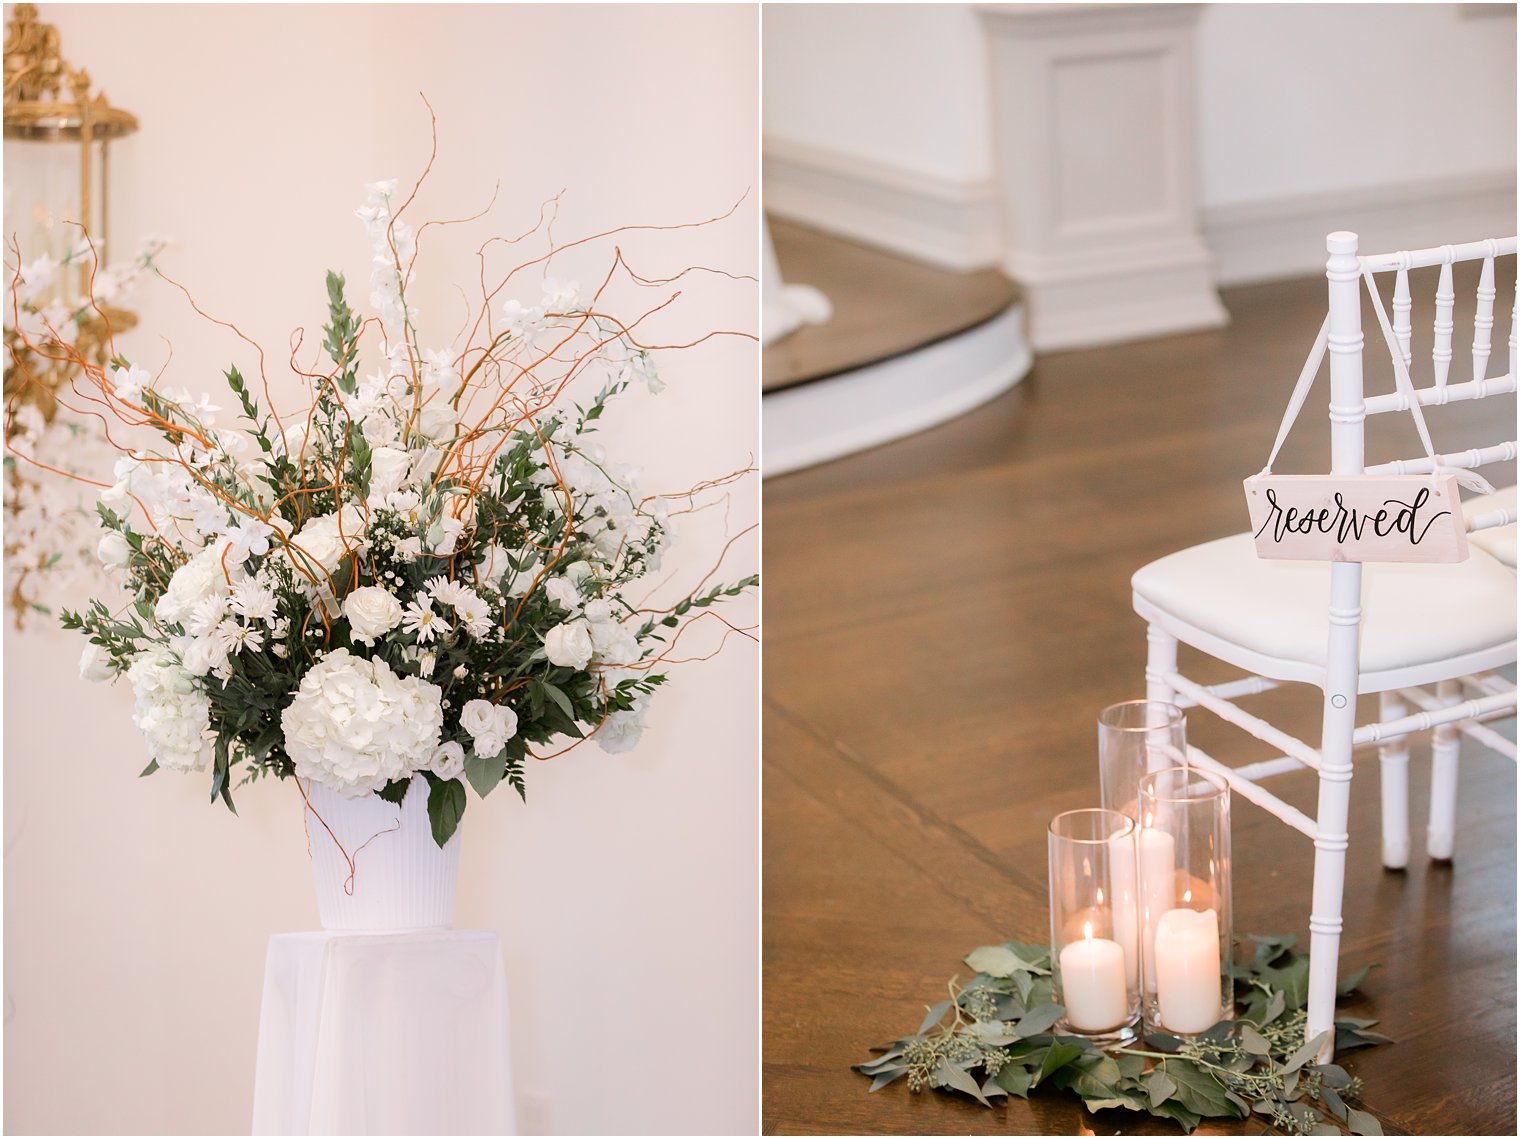 Floral decor ideas for church ceremonies | Wedding ceremony florals by Crest Florist